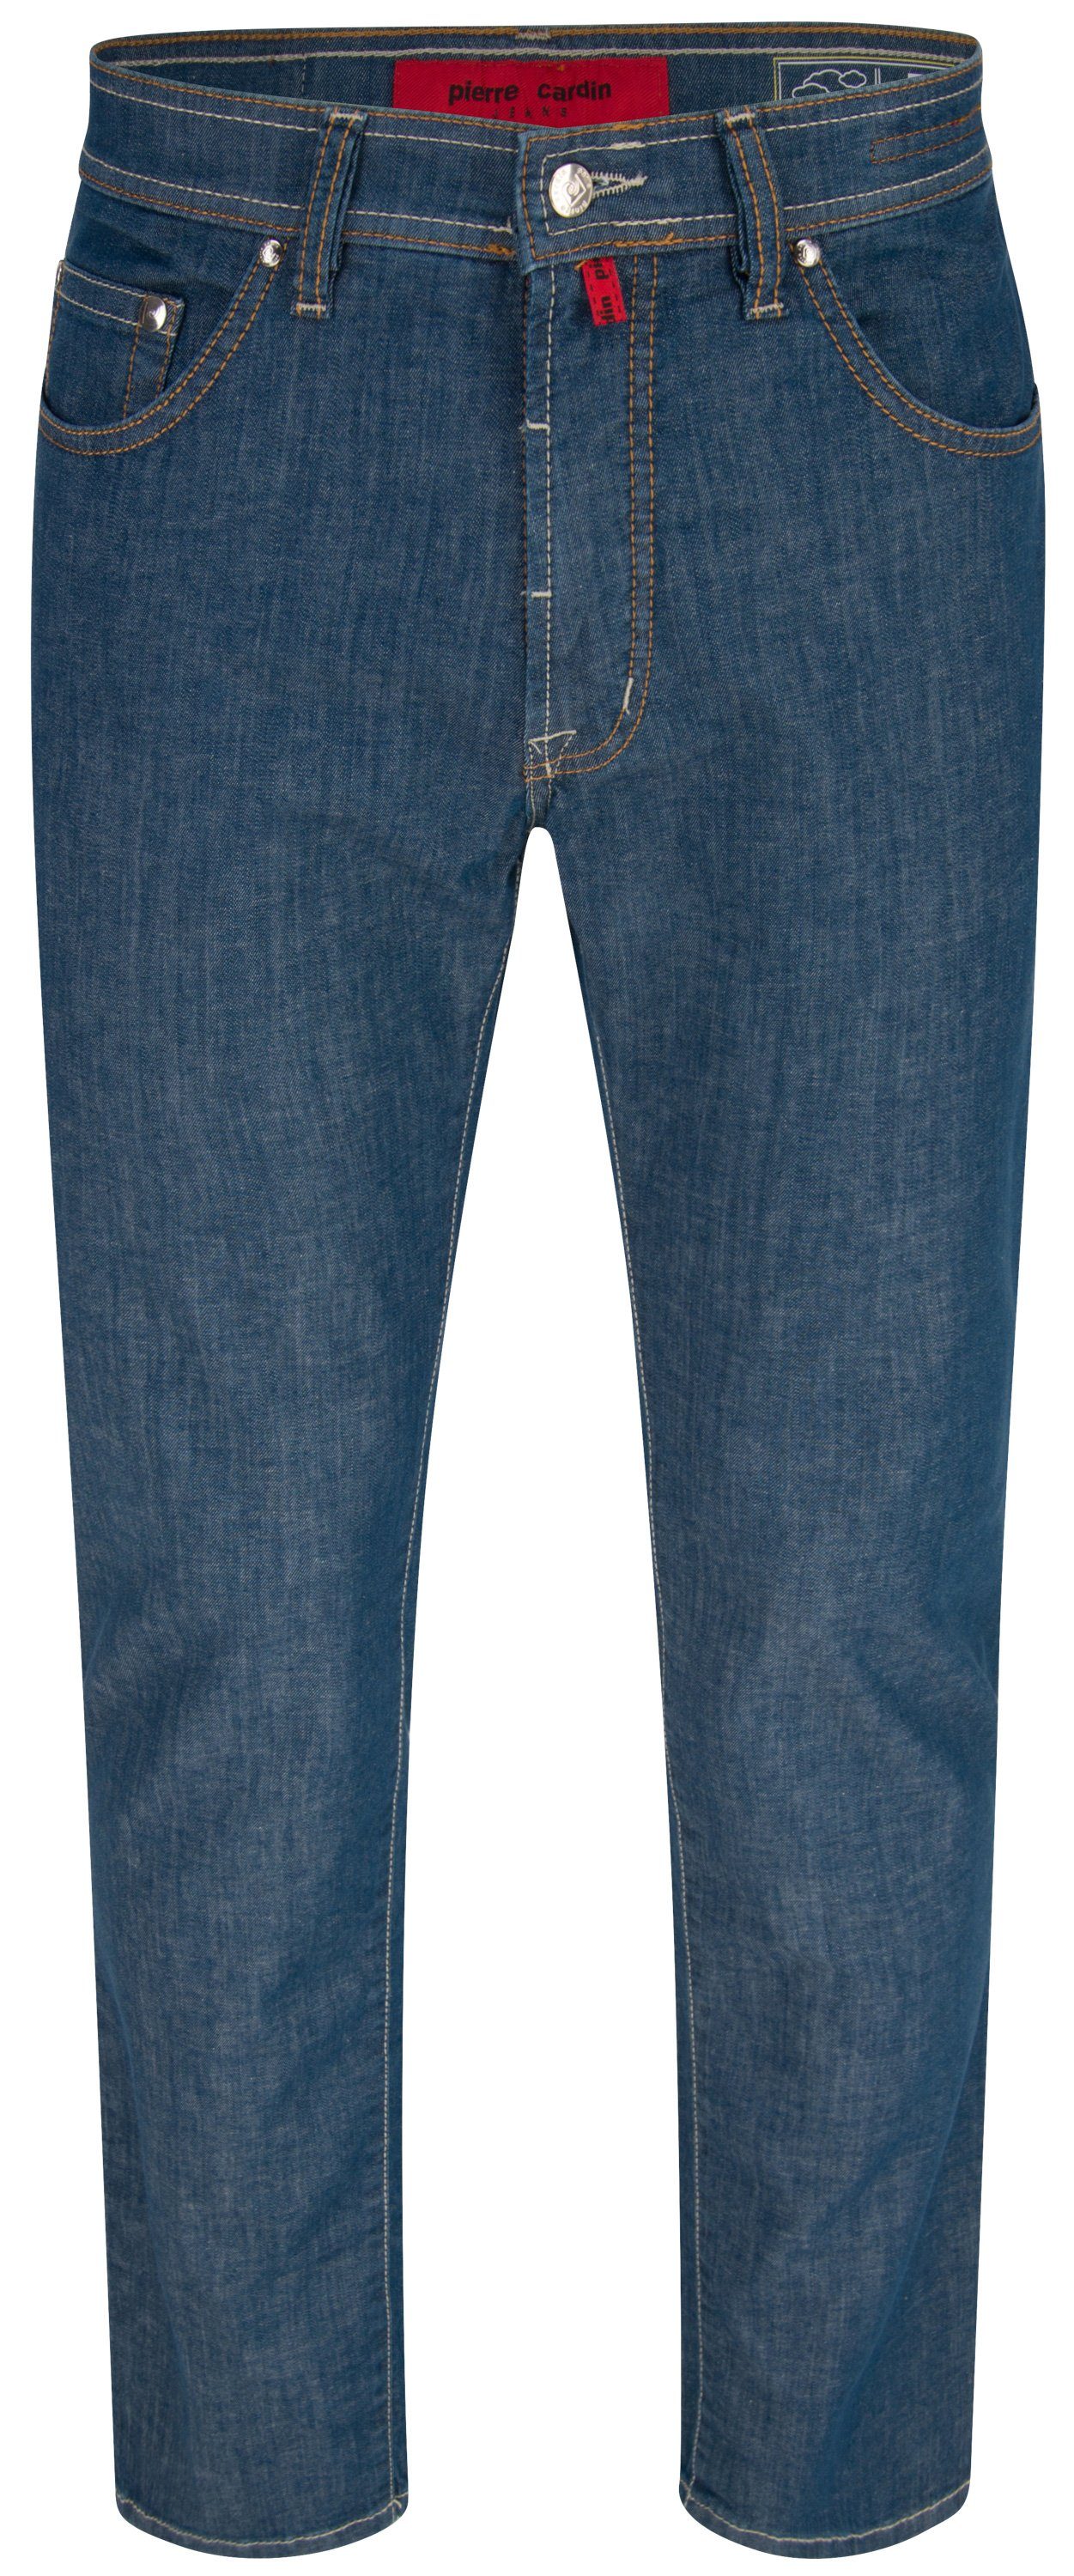 Pierre Cardin 5-Pocket-Jeans PIERRE CARDIN DEAUVILLE summer air touch dove blue 31961 7330.08 | Straight-Fit Jeans